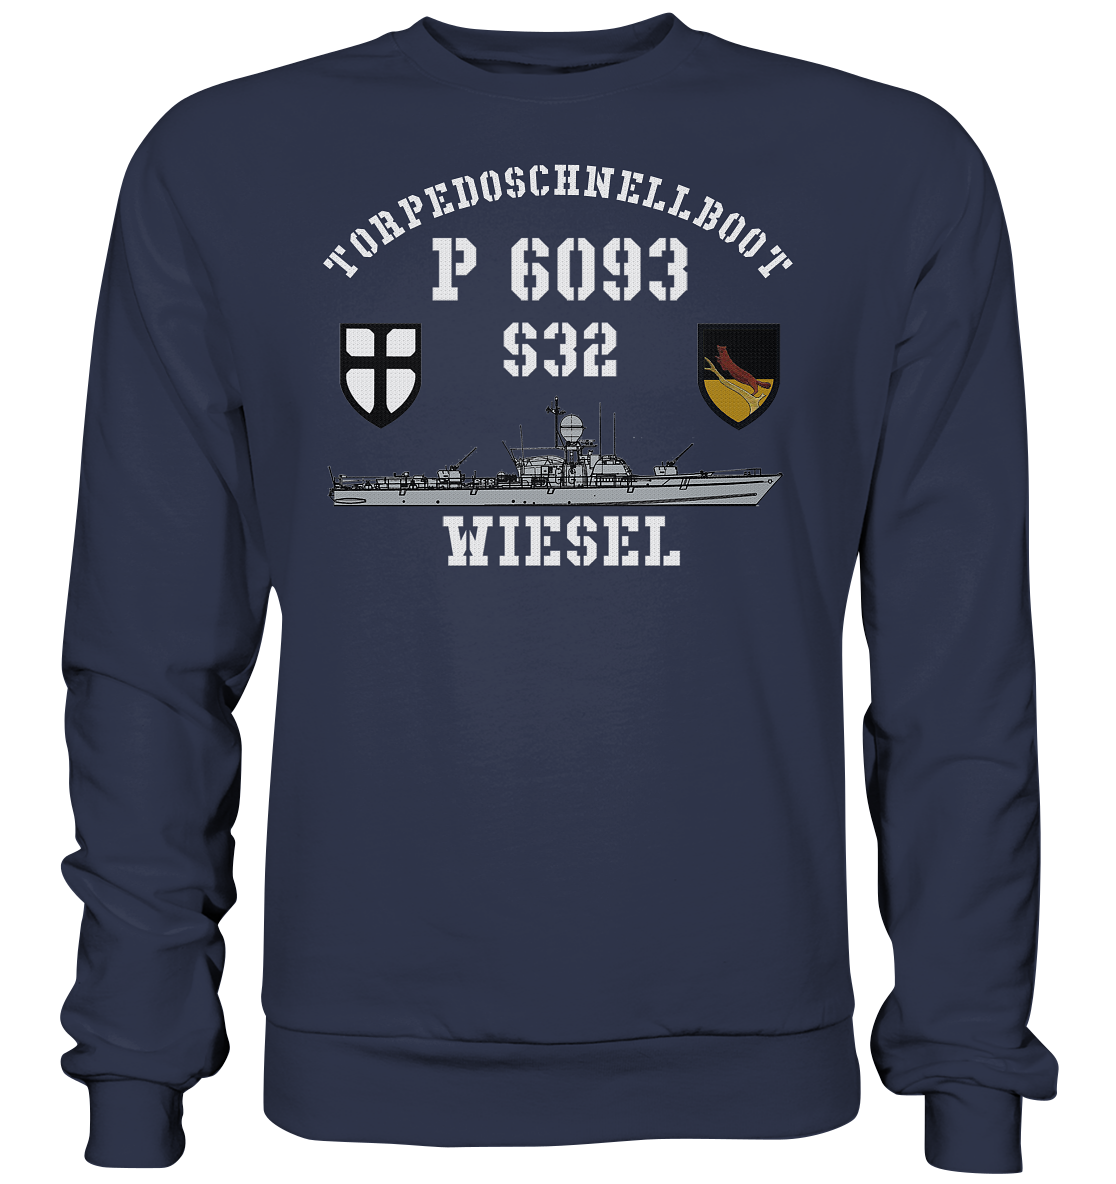 S32 WIESEL - Premium Sweatshirt